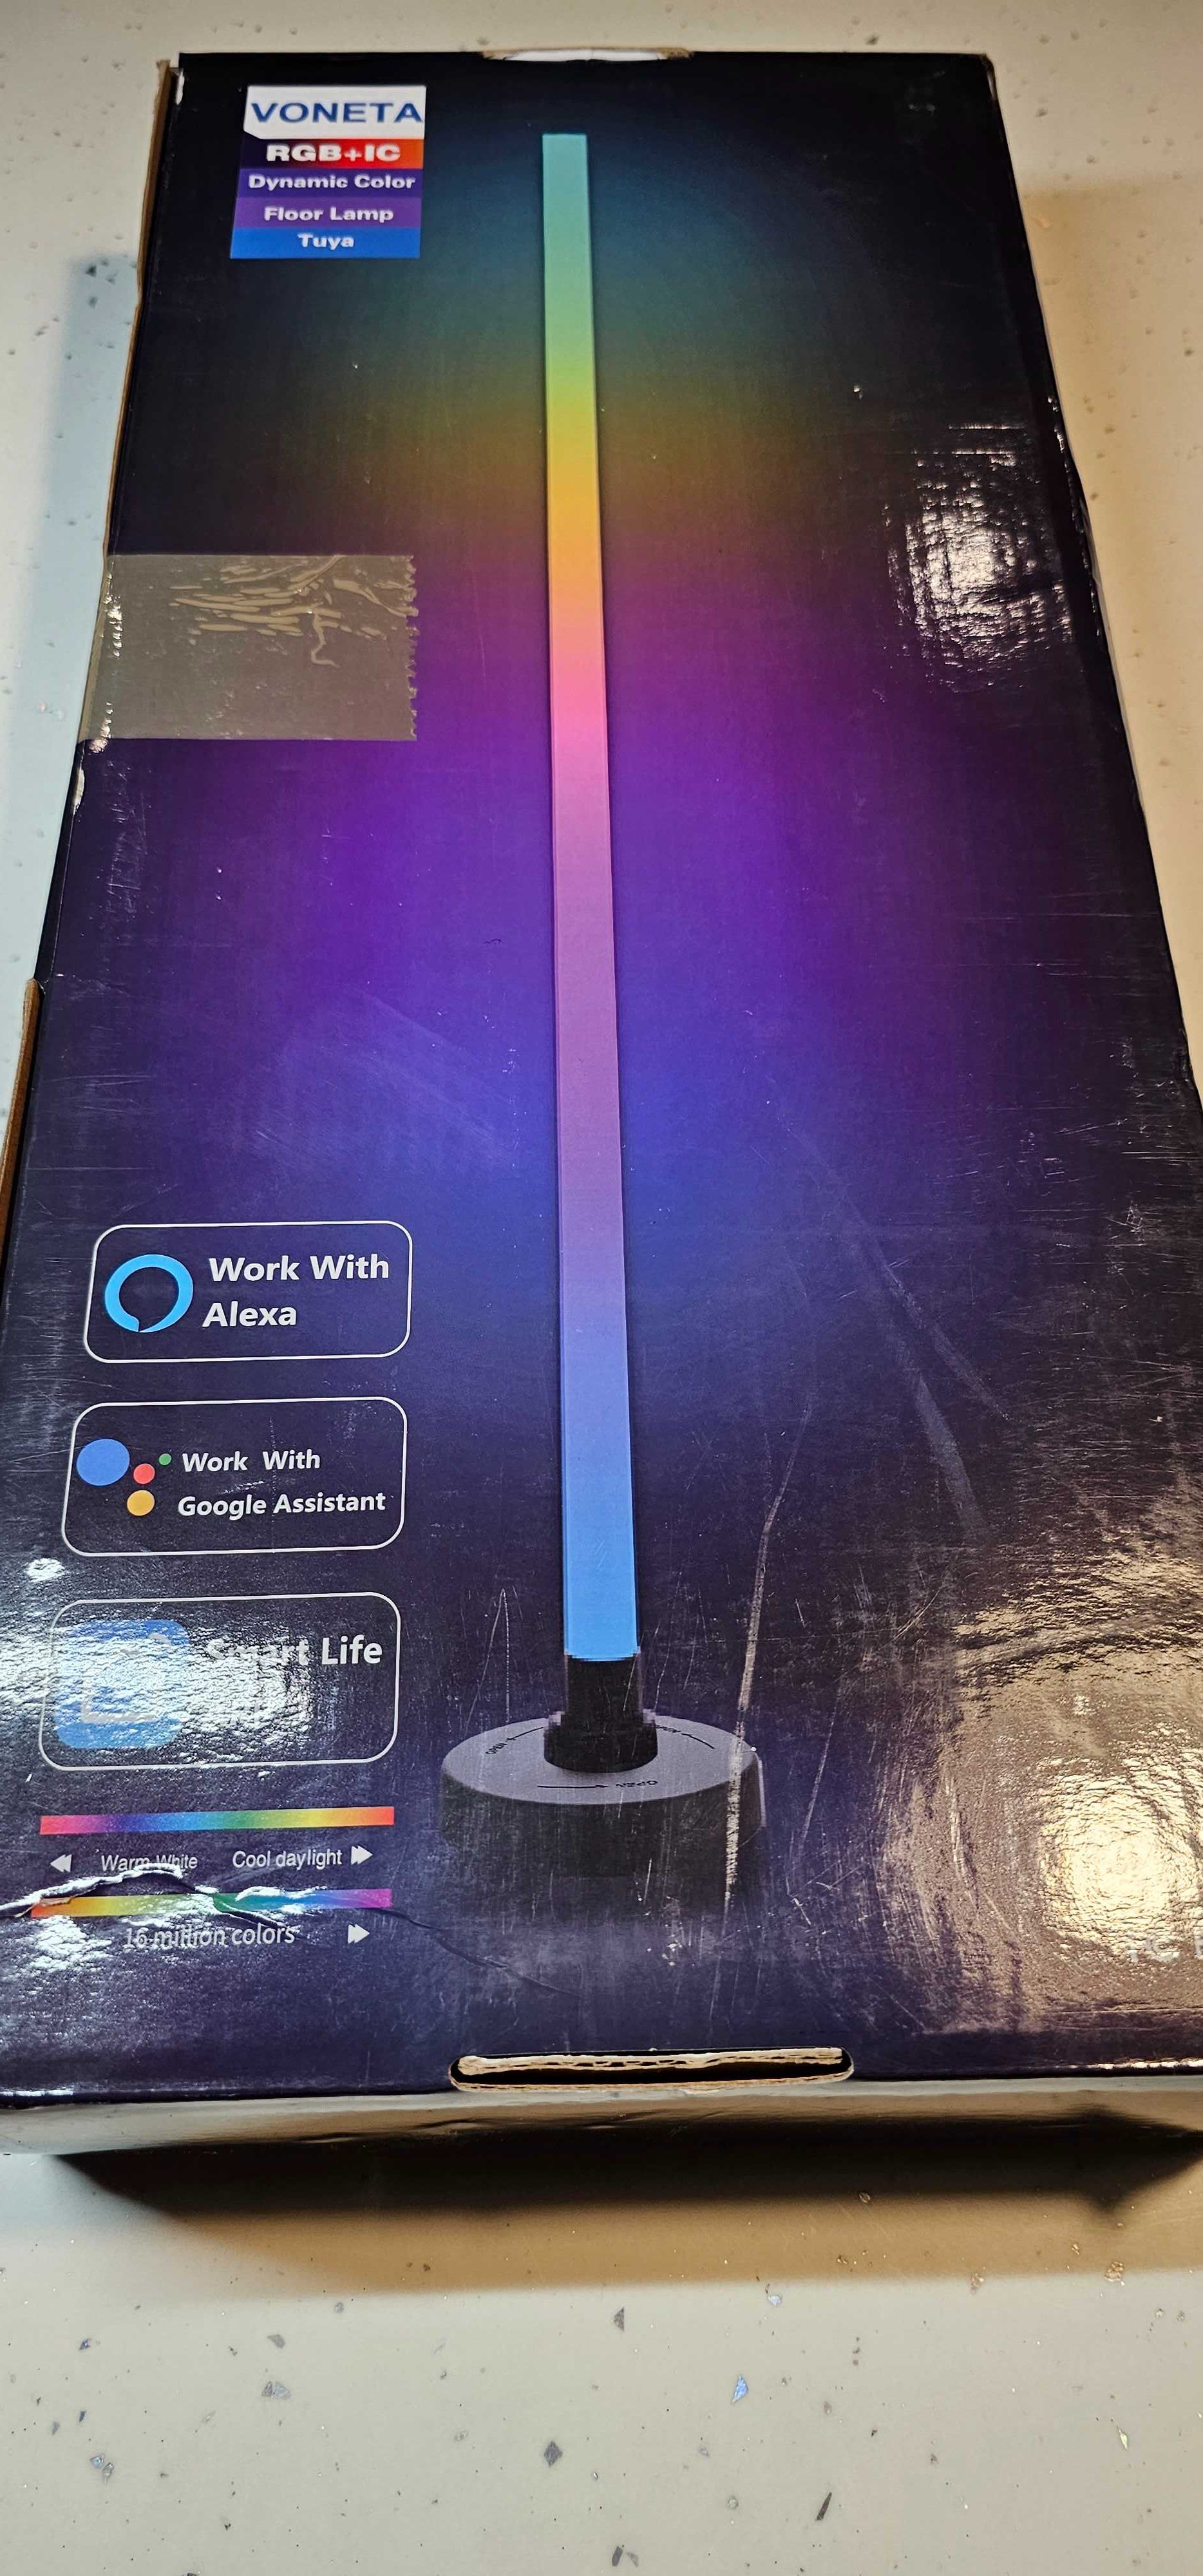 Lampa led kolorowa RGB+IC